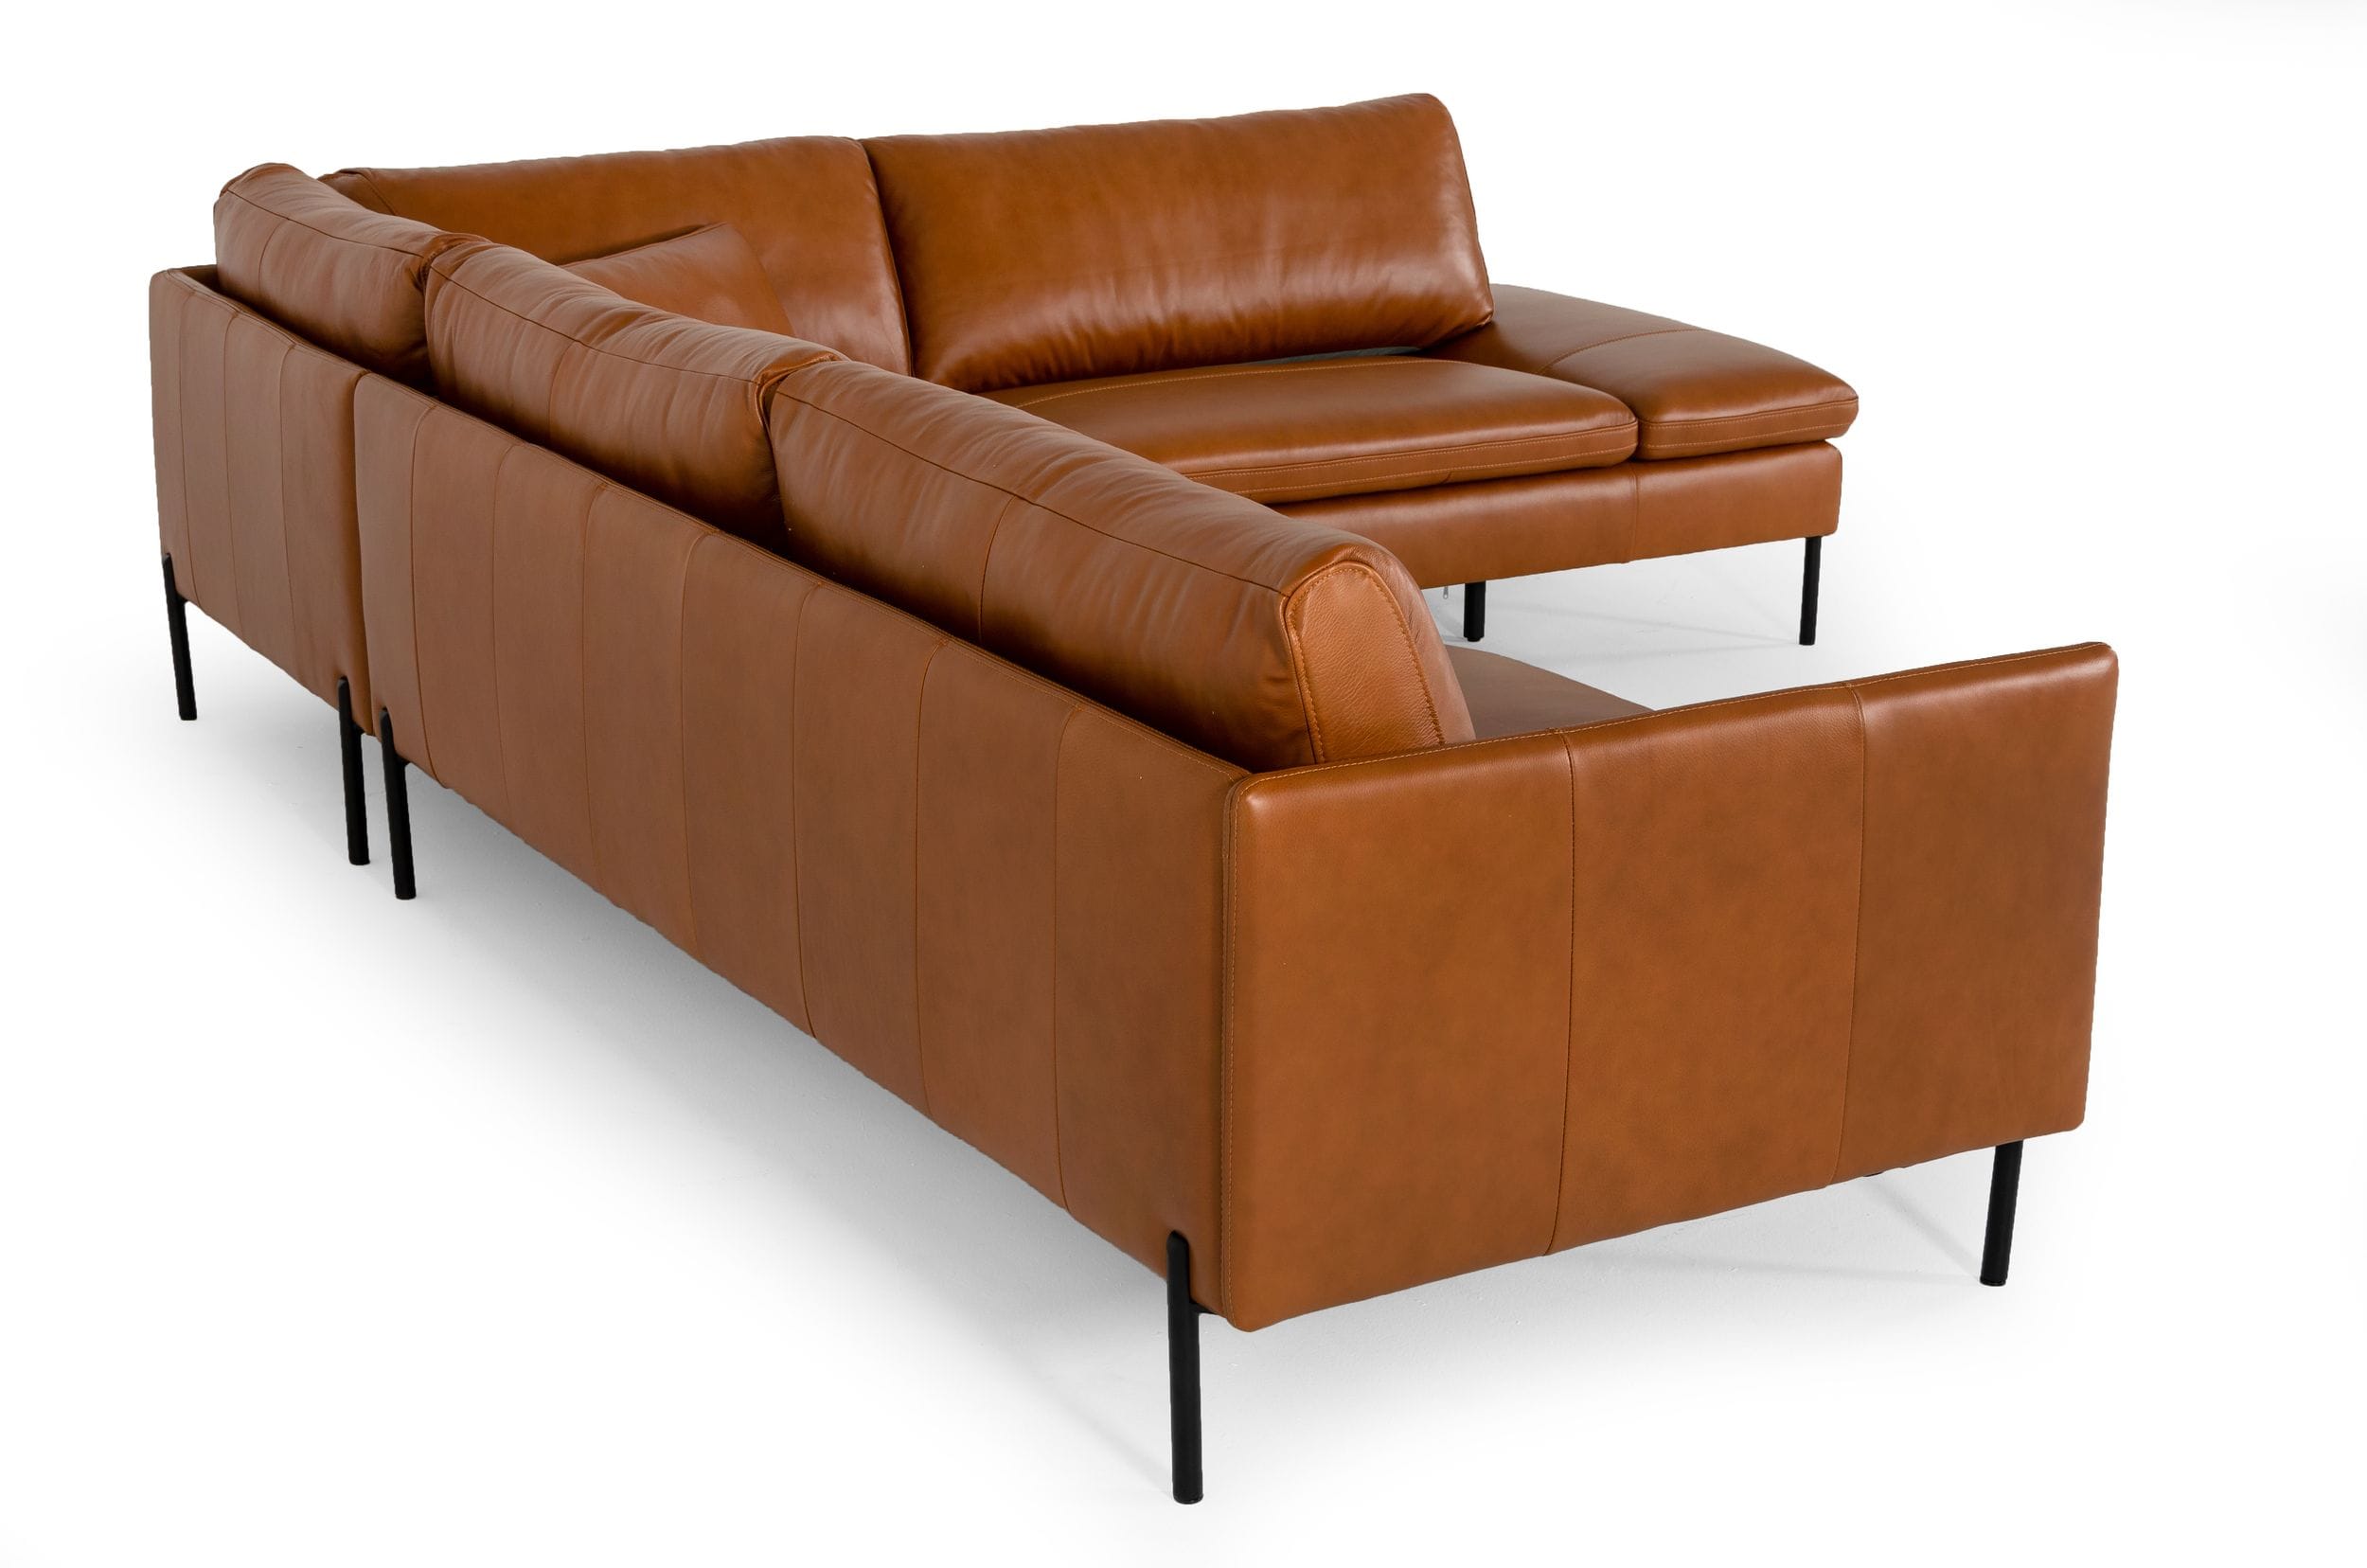 Divani Casa Sherry - Modern Cognac Leather Right Facing Sectional Sofa-Sectional Sofa-VIG-Wall2Wall Furnishings